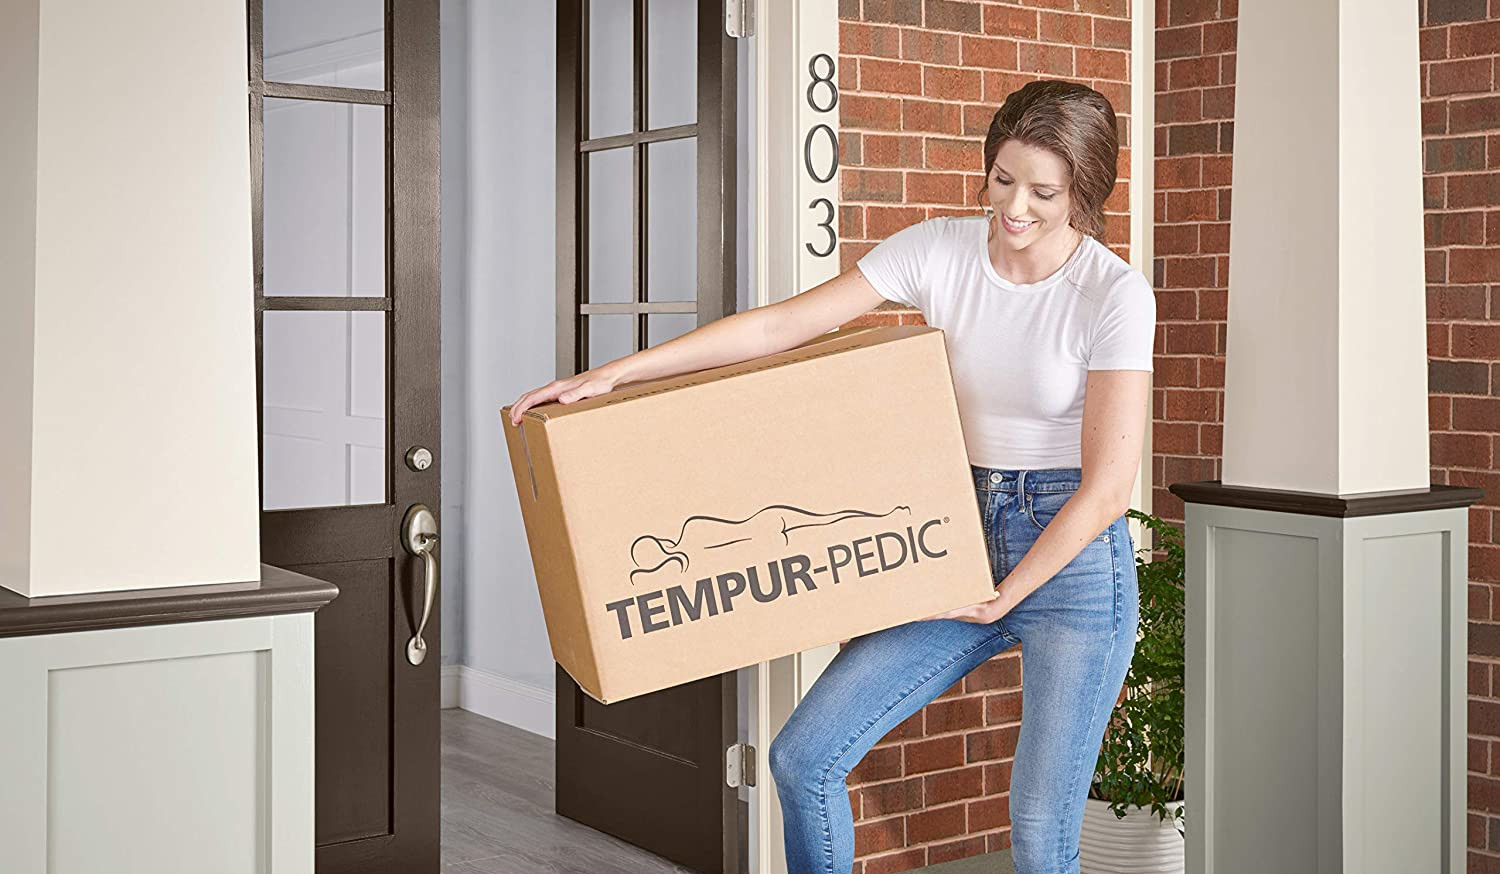 is the tempur topper mattress topper worth it?